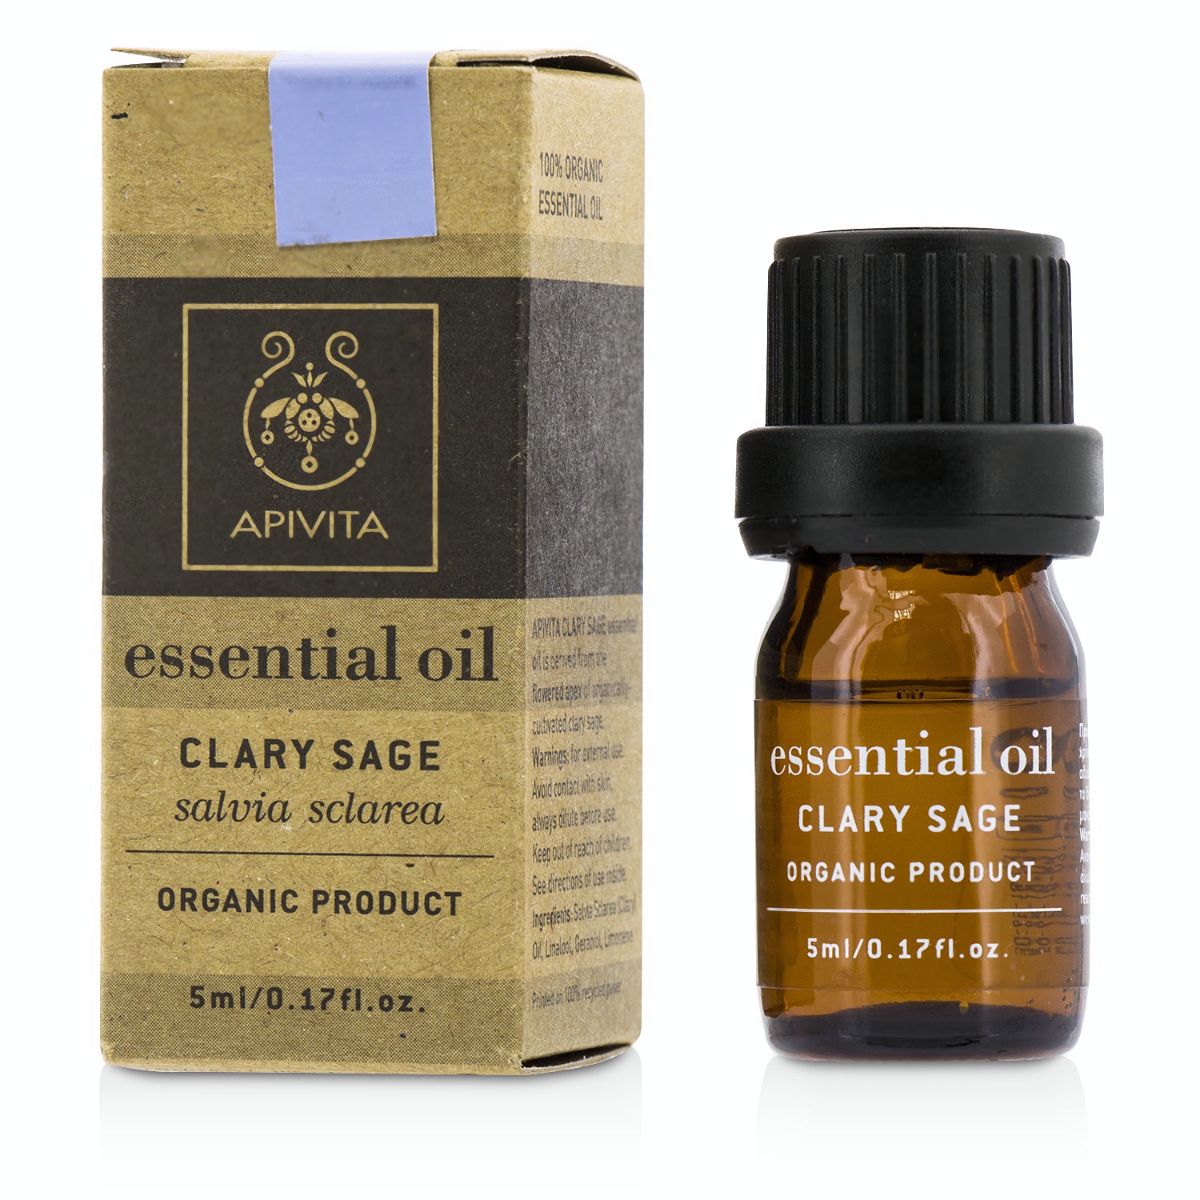 Essential Oil - Clary Sage Apivita Image